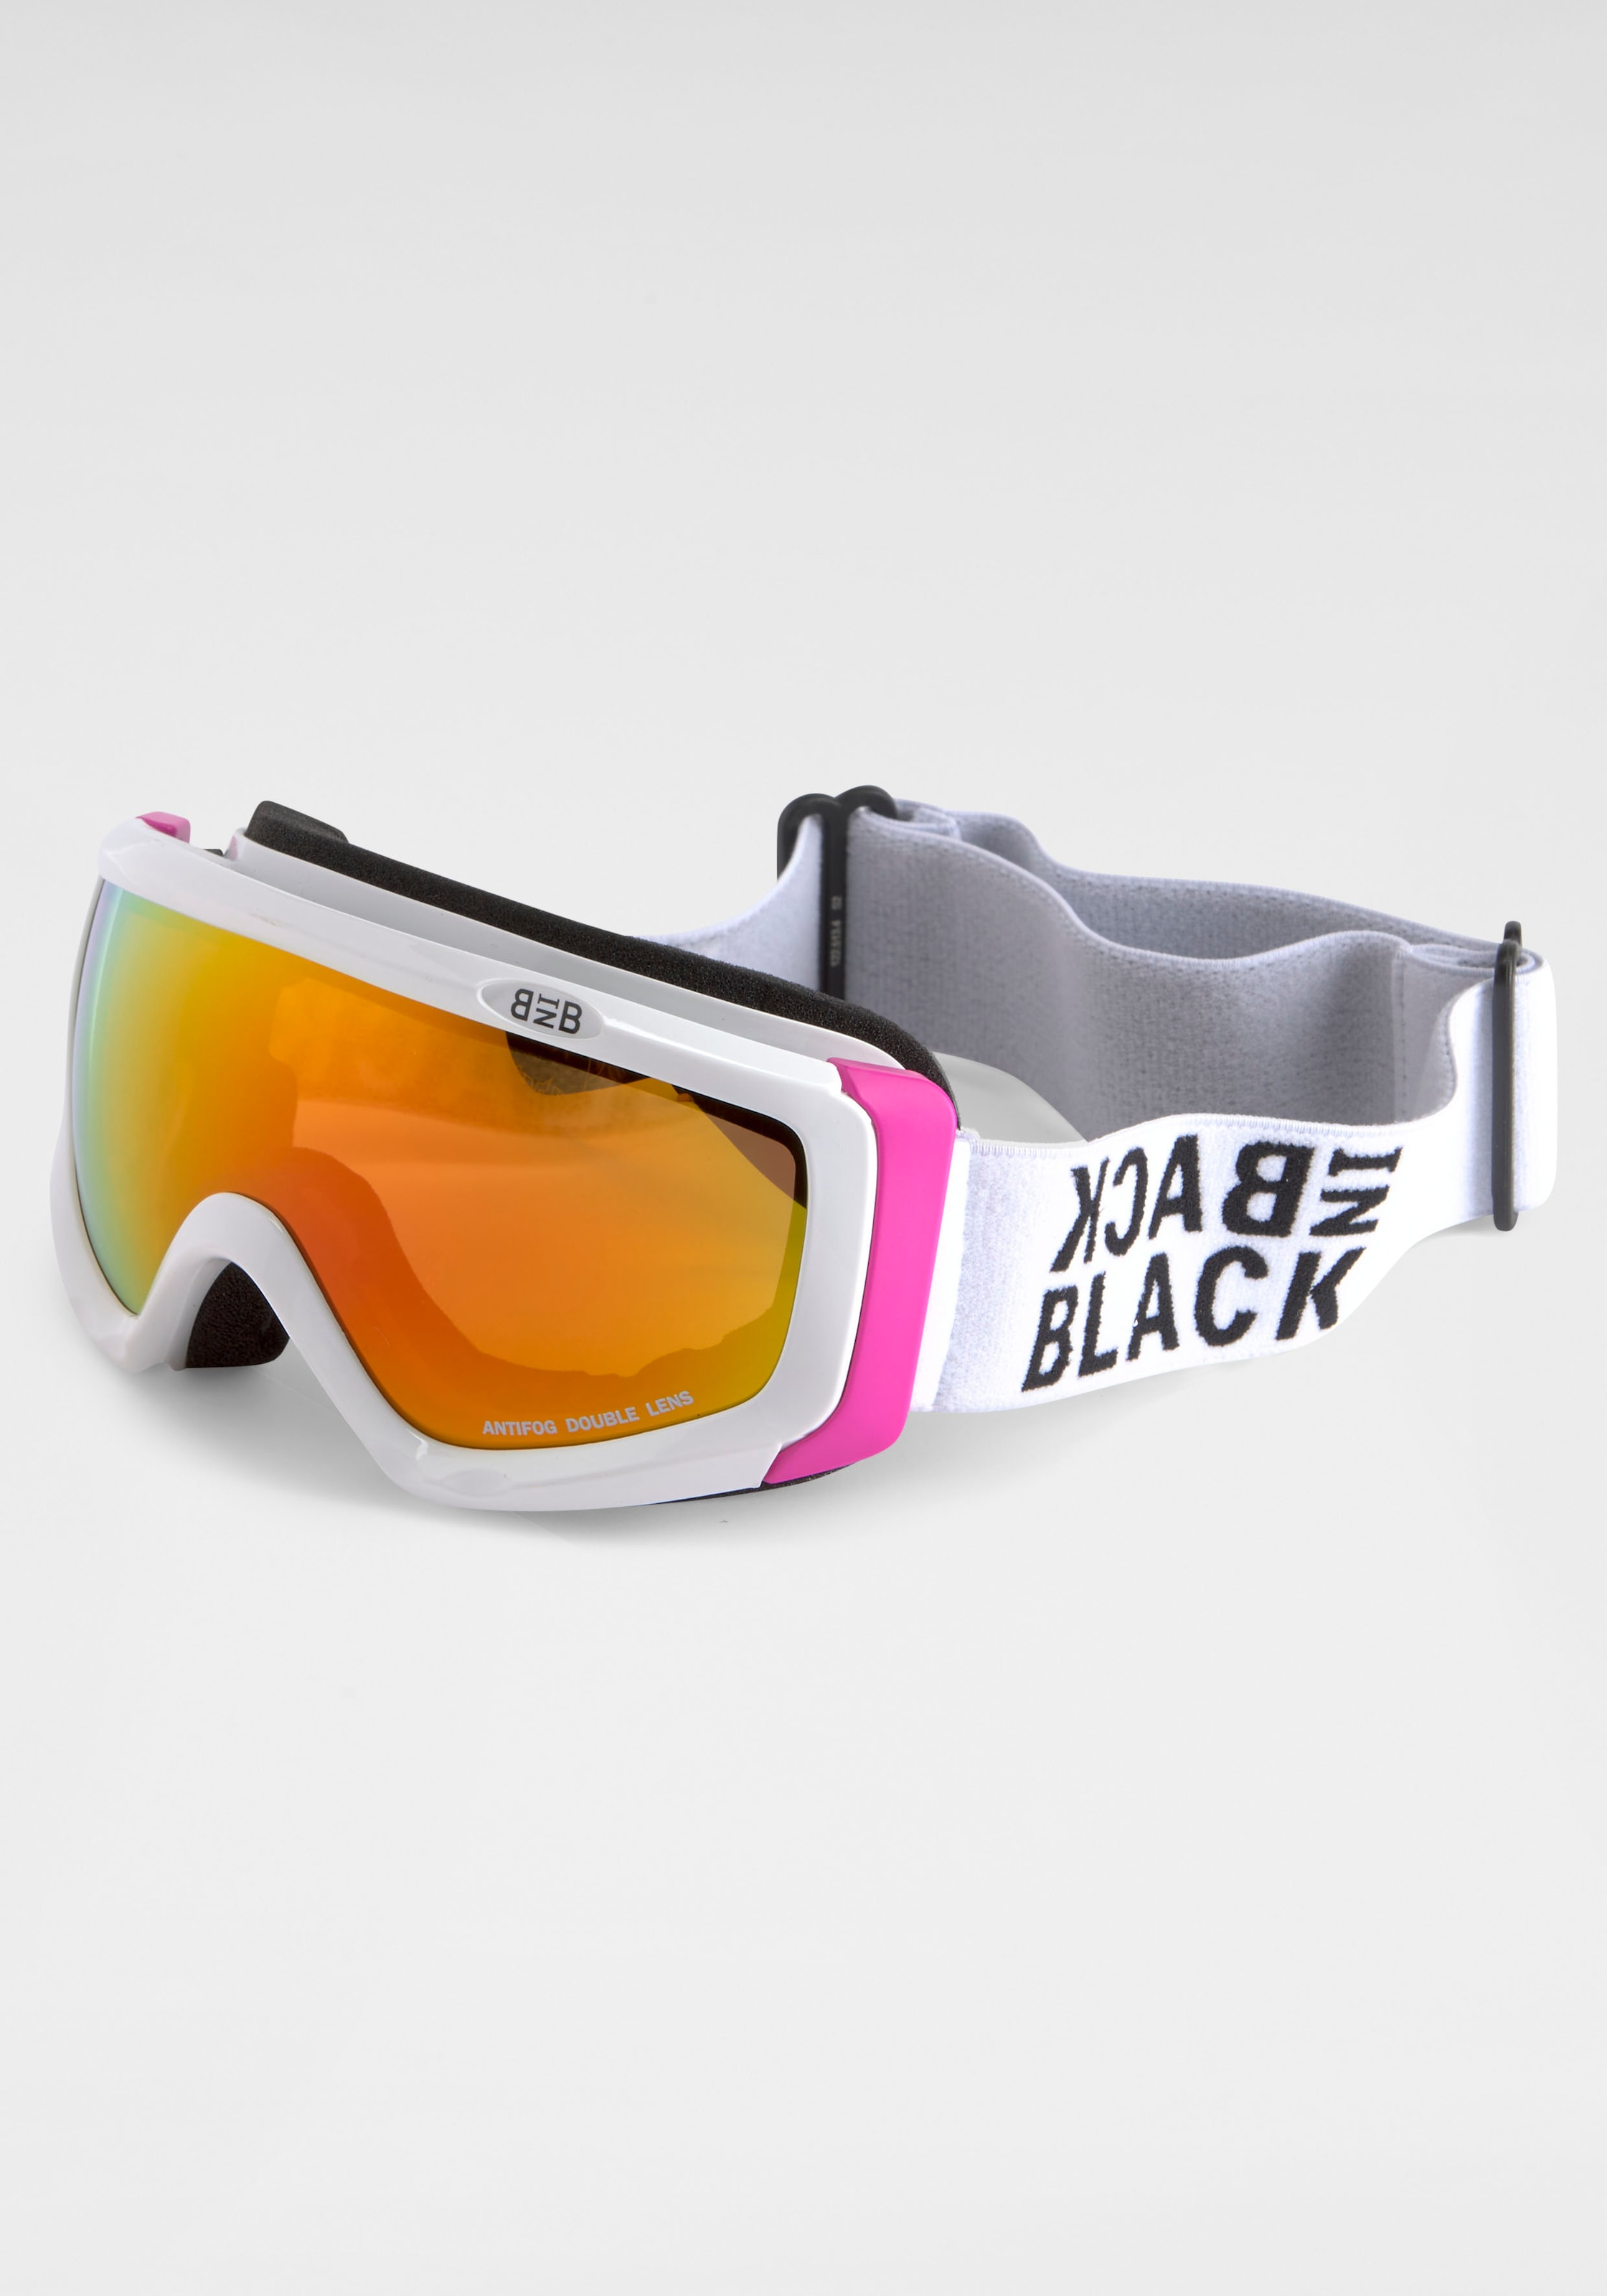 BACK IN Skibrille, im Online-Shop Antifog double kaufen BLACK Lens Eyewear